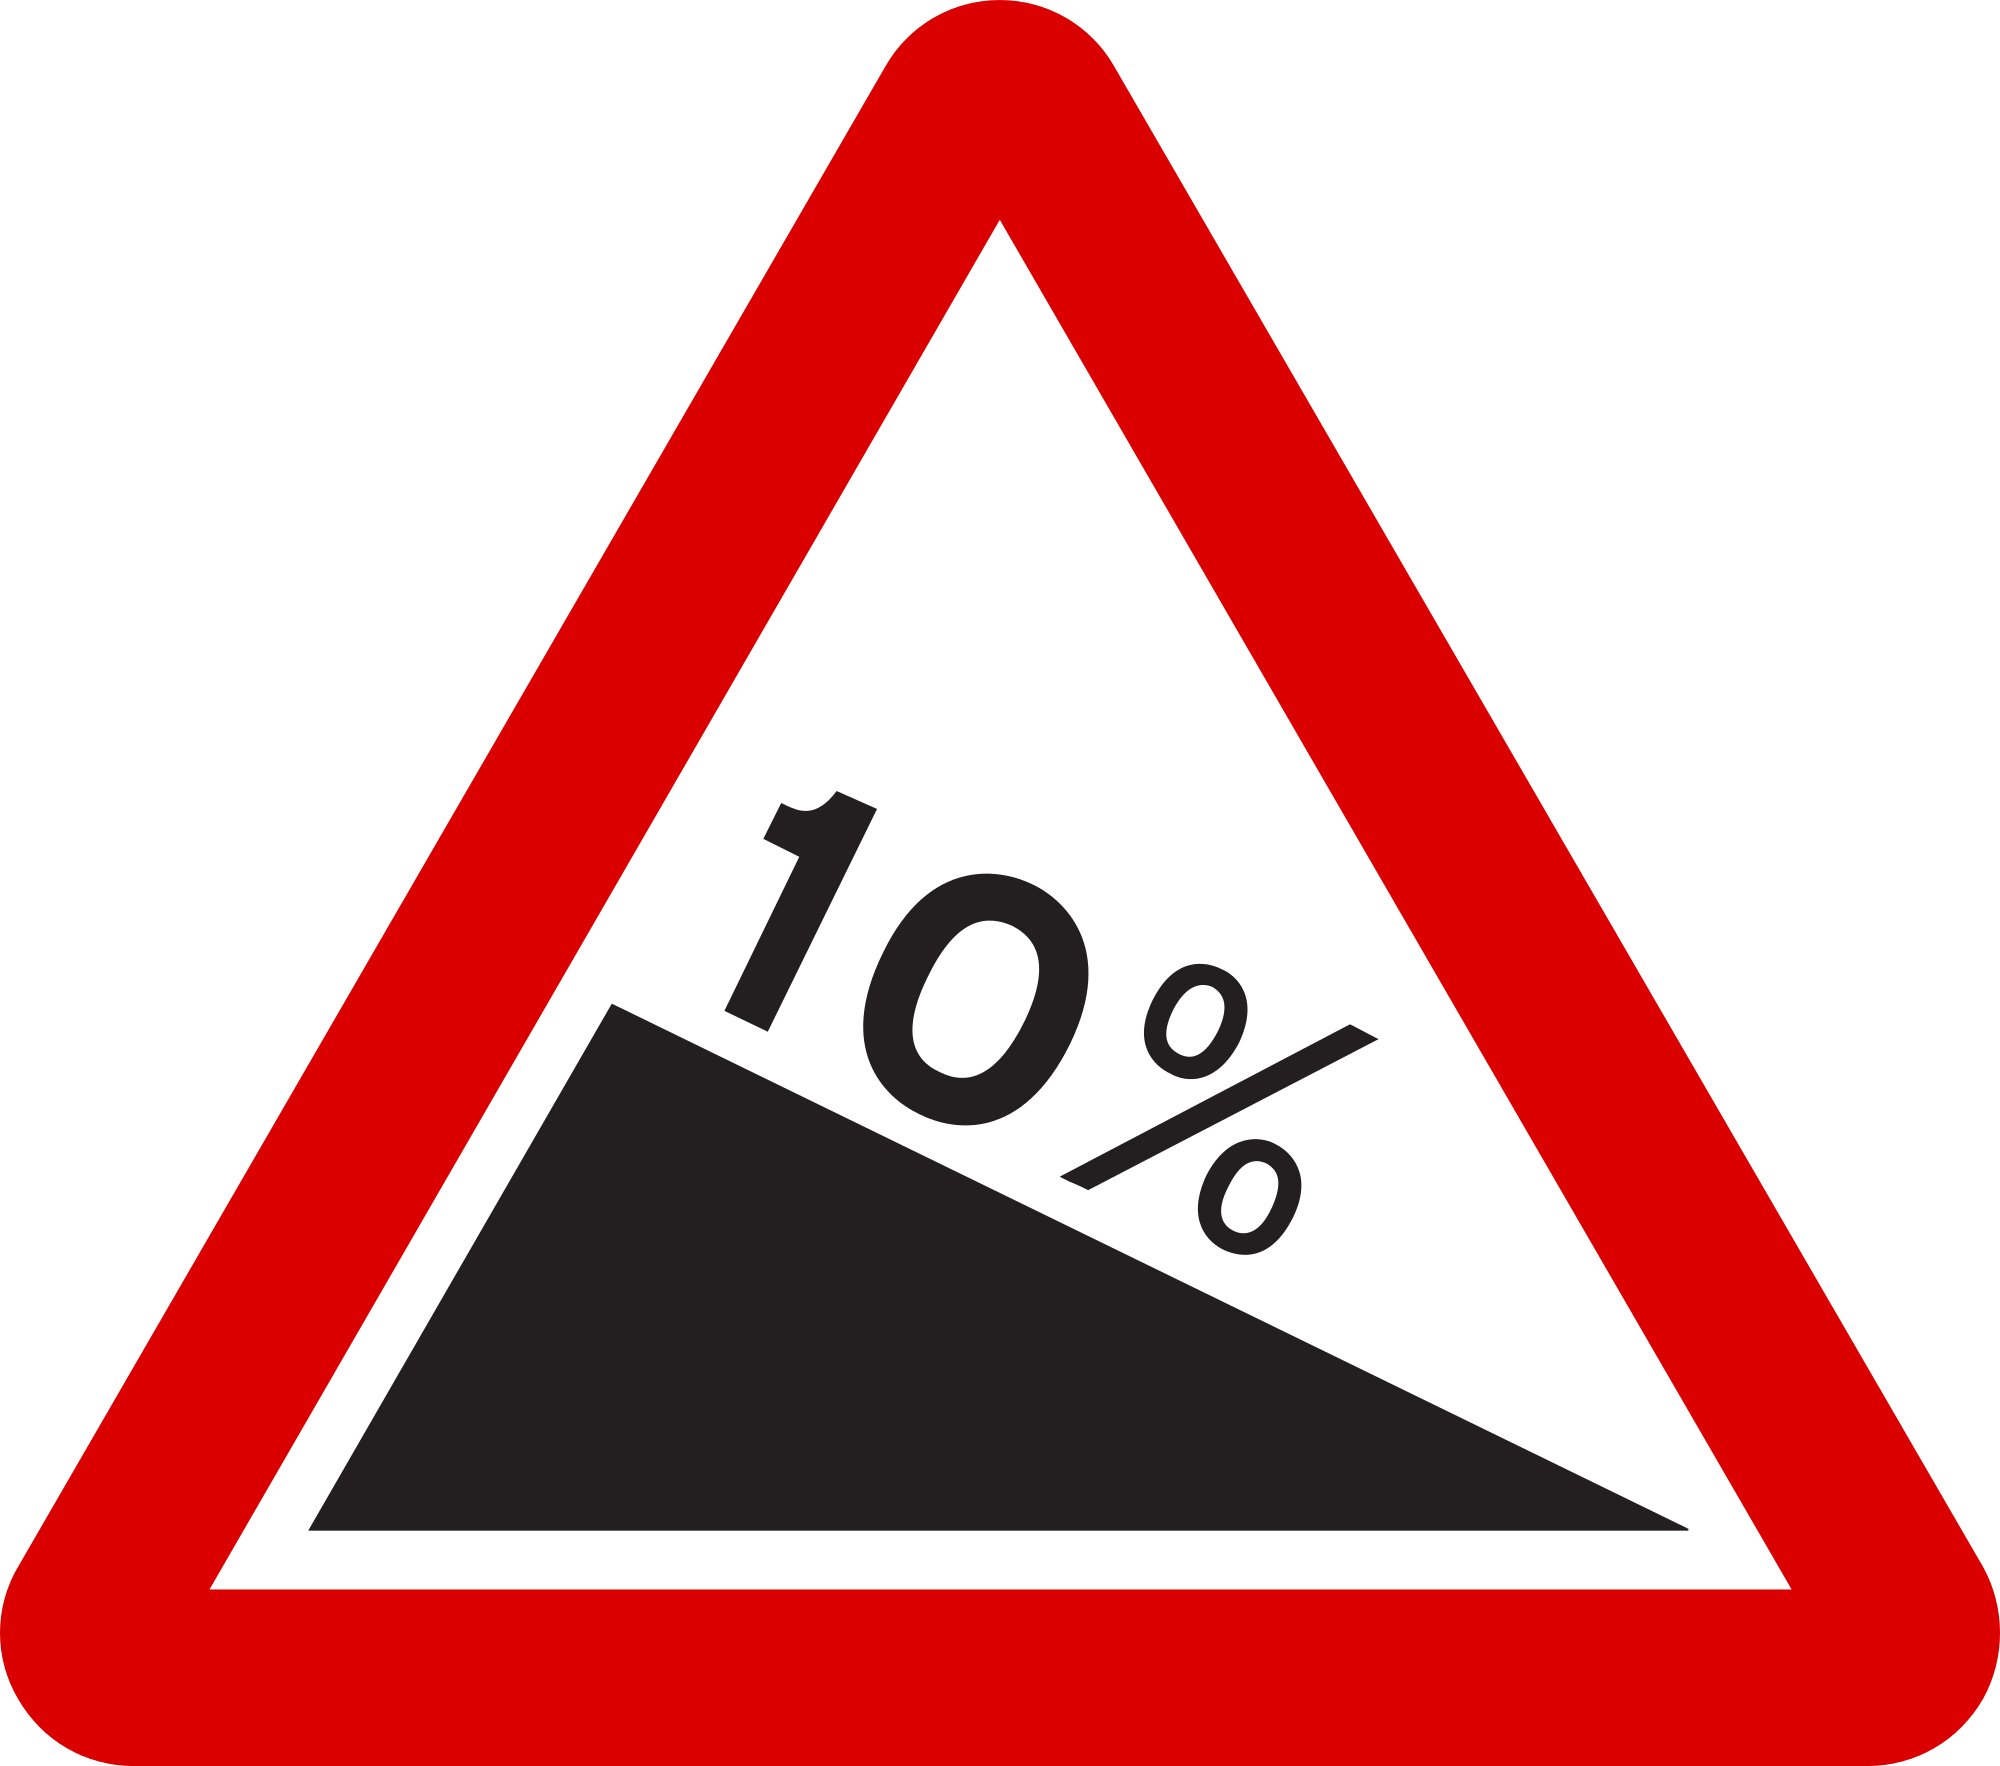 danger clipart road work sign